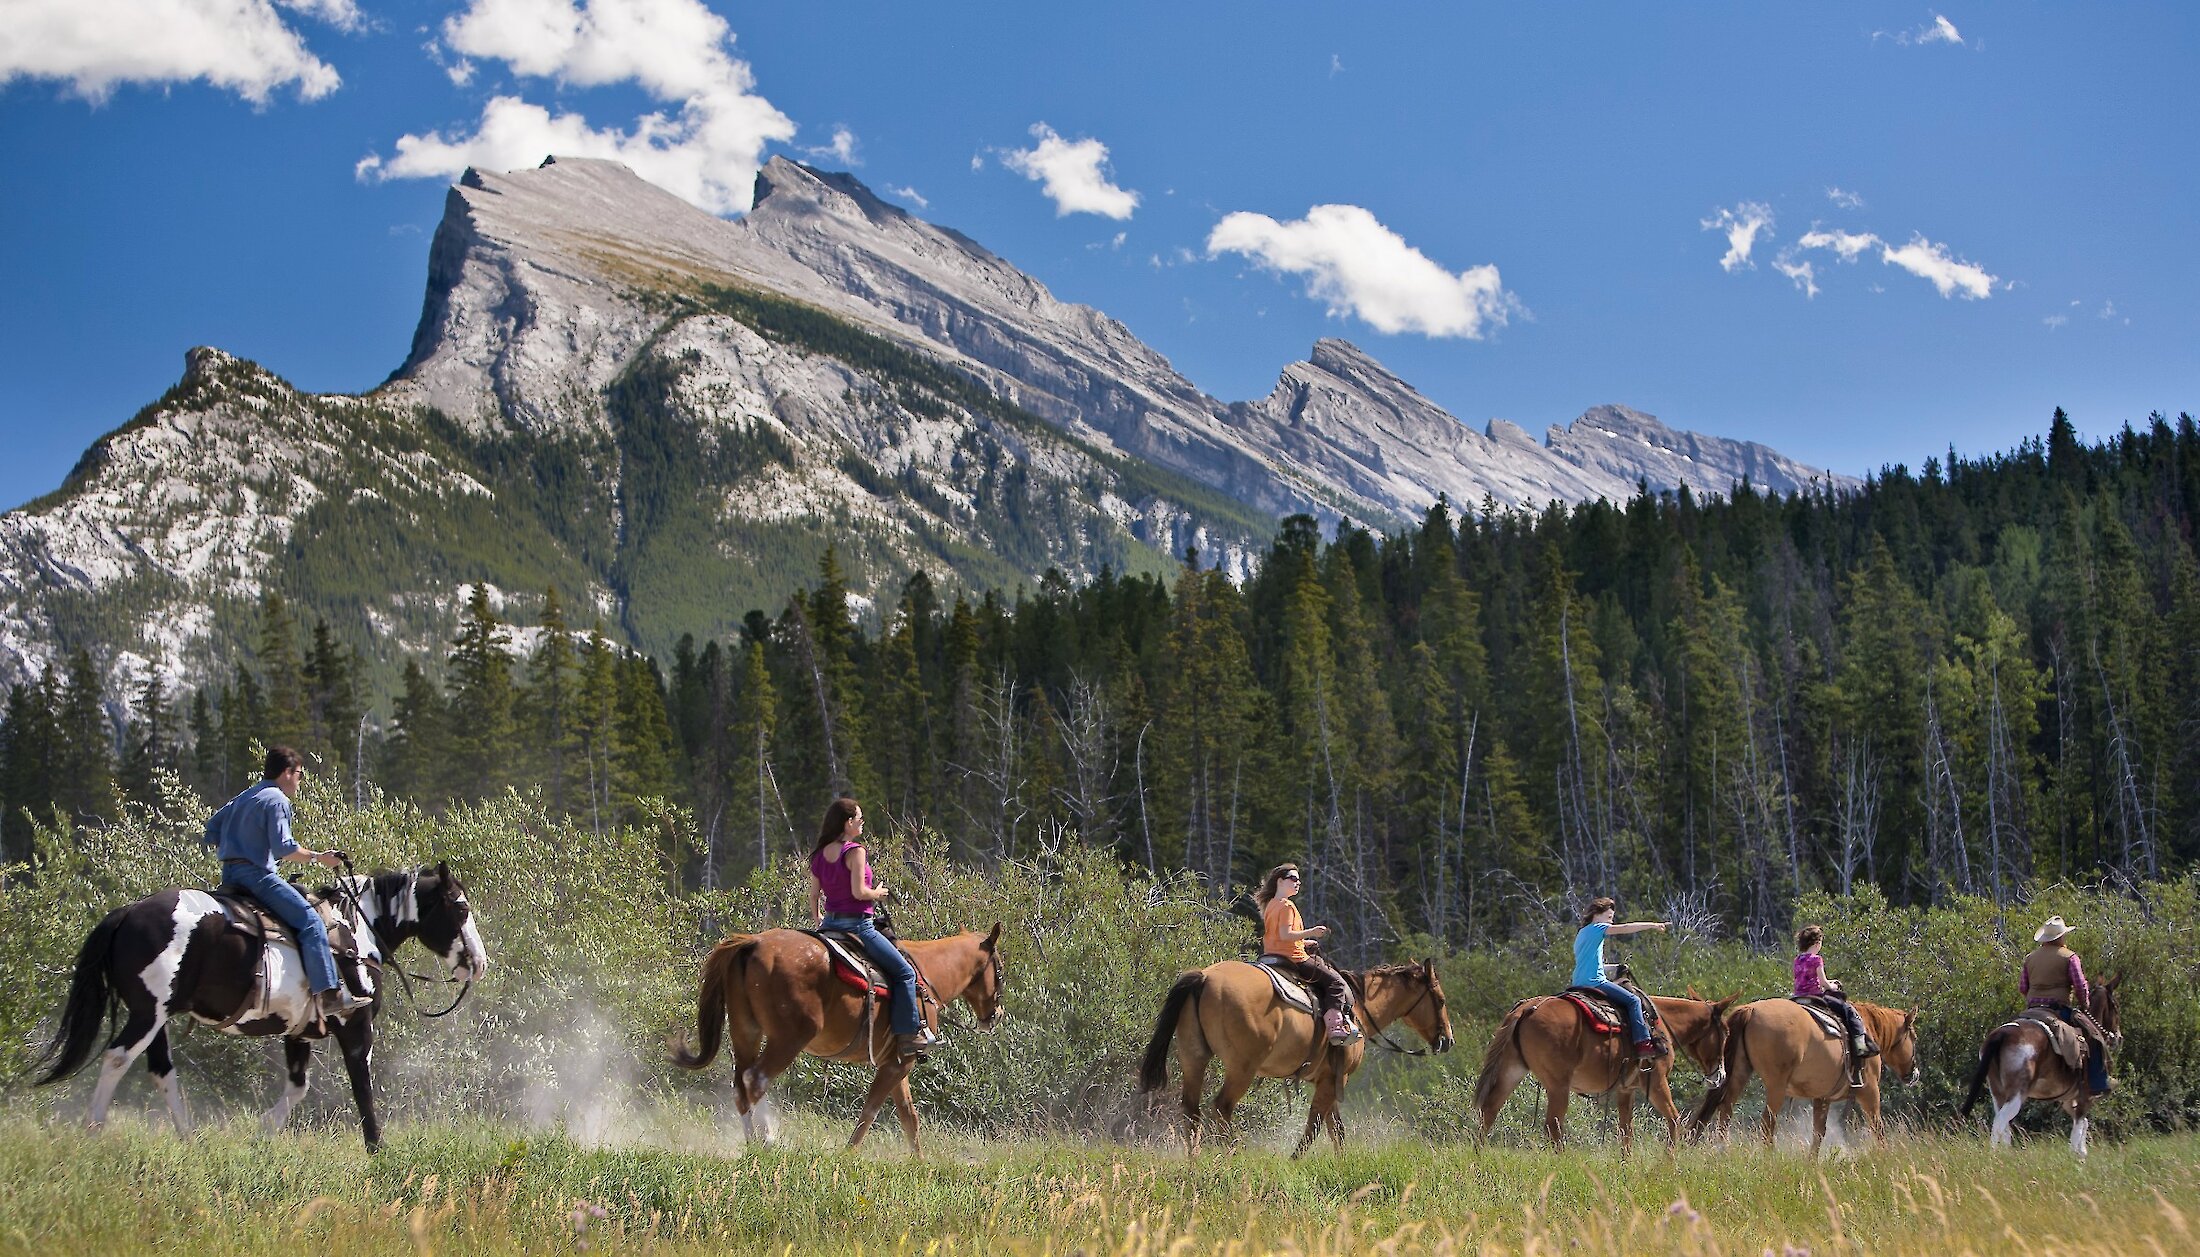 Trail rides form Warner stables in Banff